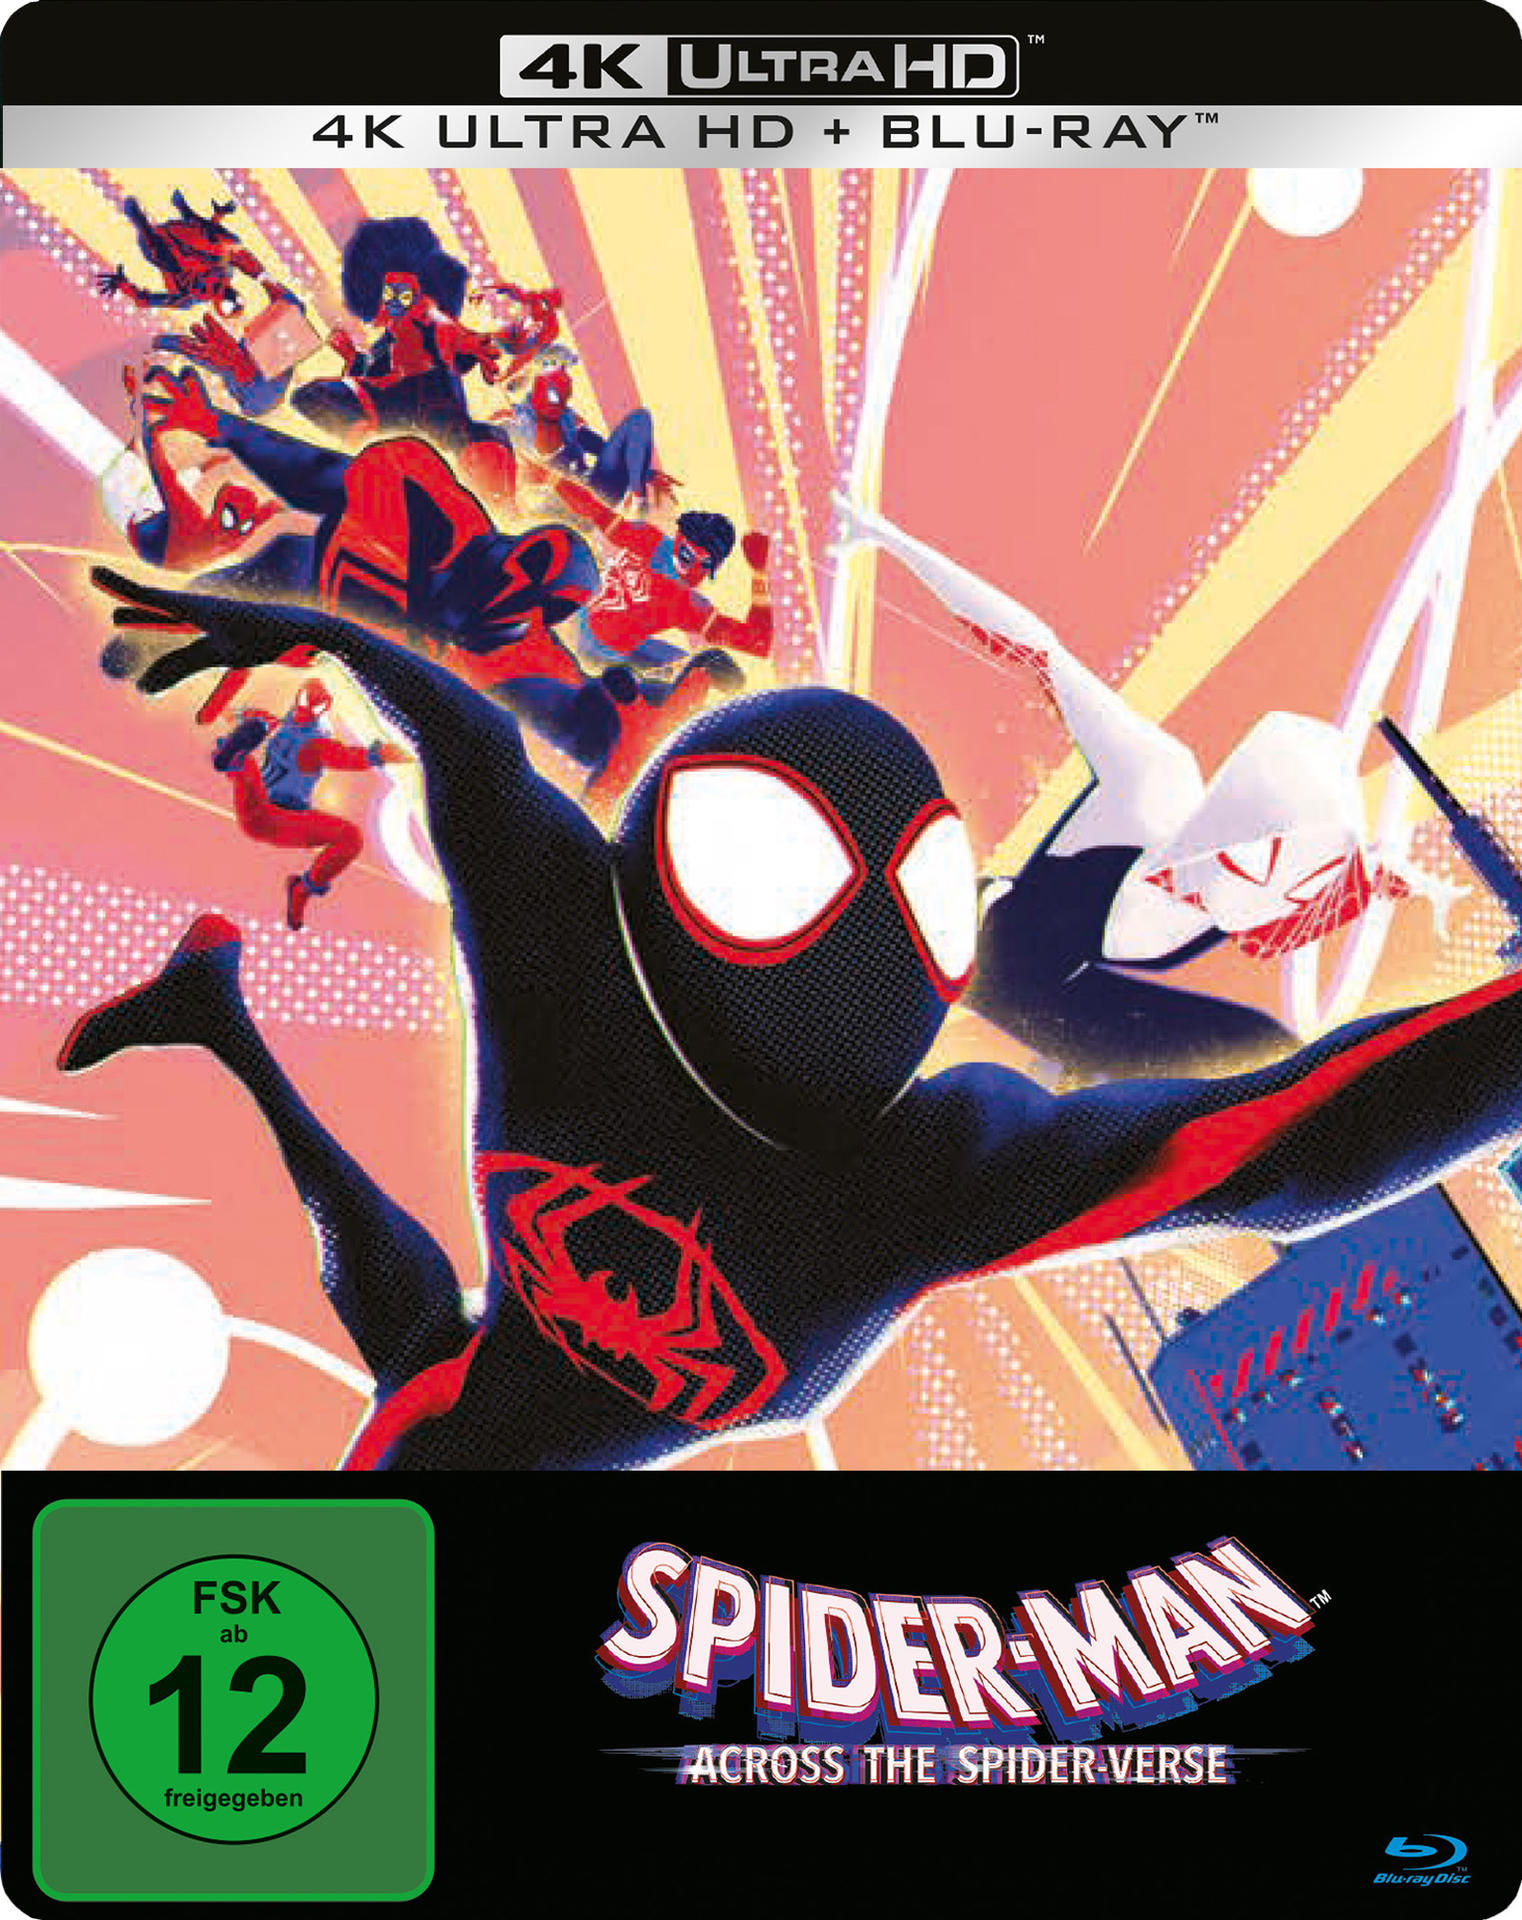 Spider-Man: Across the Edition 4K HD + Blu-ray Blu-ray Limitierte Spider-Verse SteelBook® Ultra